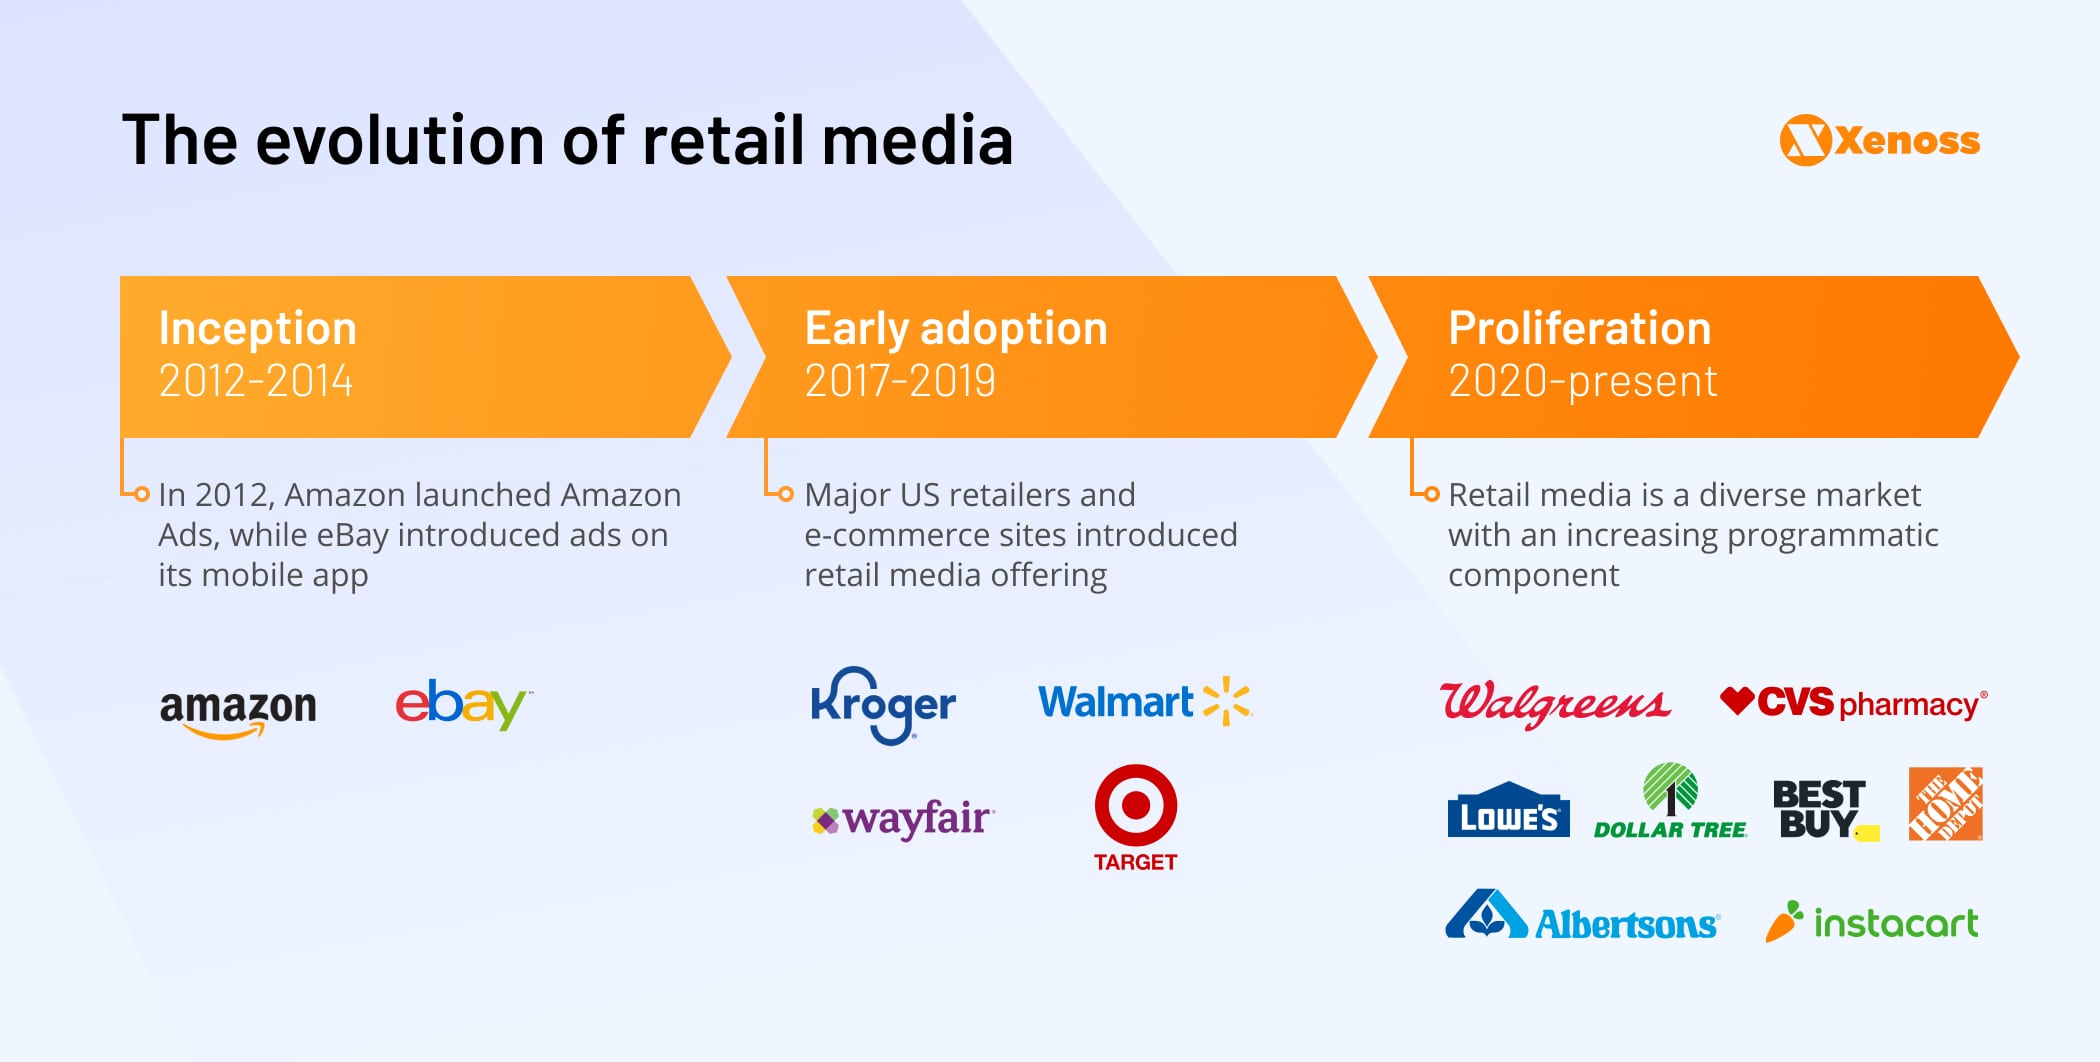 The evolution of retail media - Xenoss blog